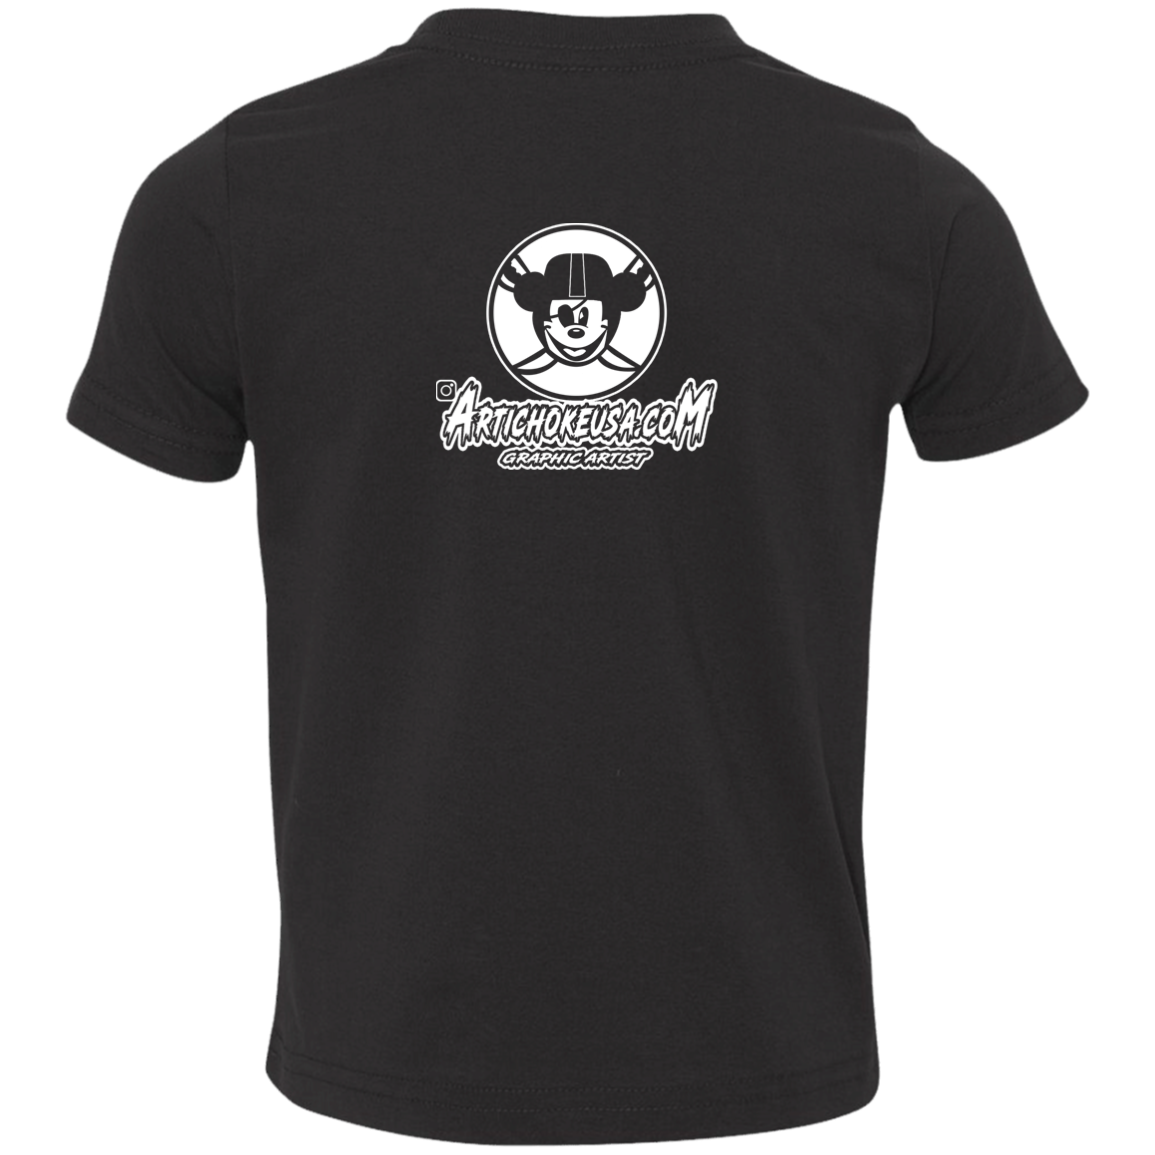 ArtichokeUSA Custom Design. Las Vegas Raiders & Mickey Mouse Mash Up. Fan Art. Parody. Toddler Jersey T-Shirt